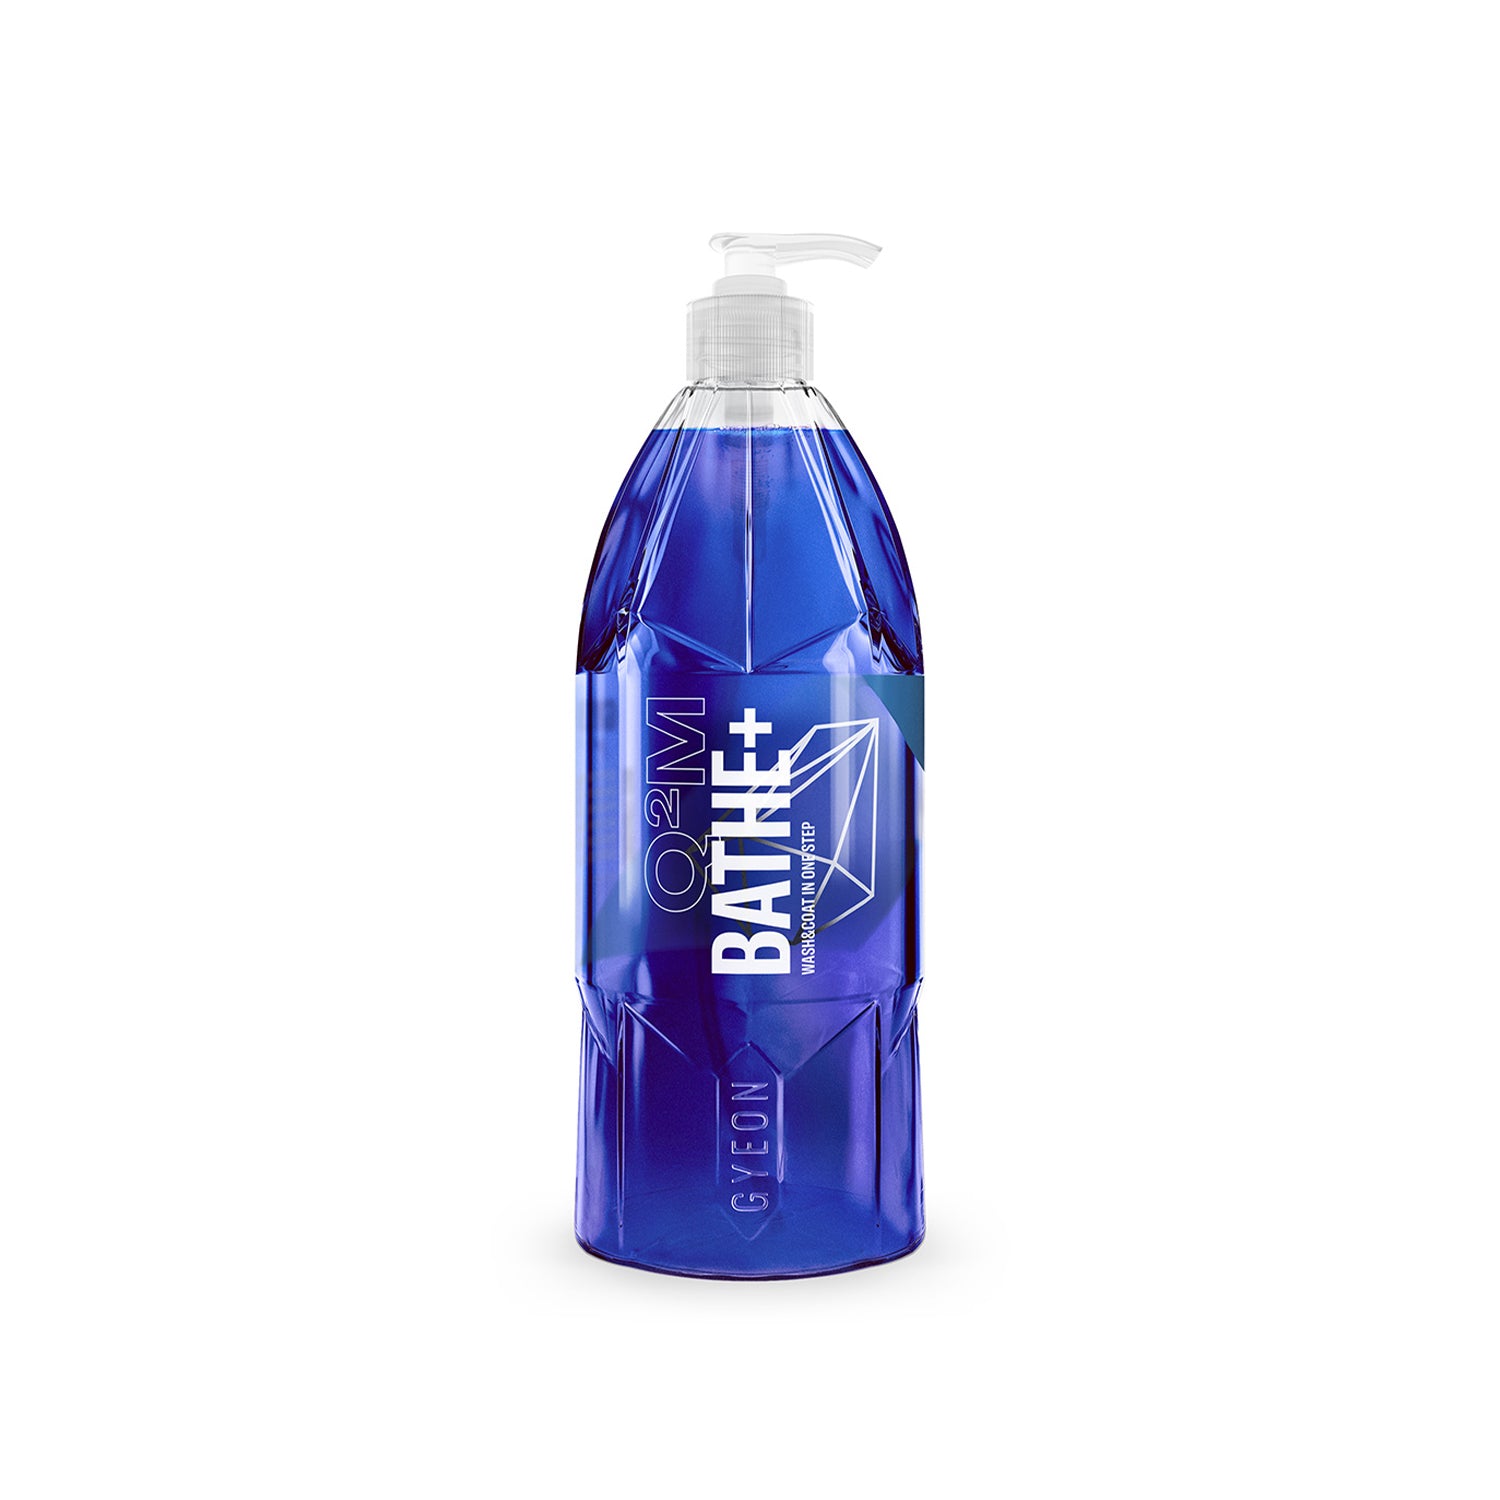 Gyeon Q2M Bathe+ Shampoo Car Wash 1000ml Bottle - Available At R44 Detailing